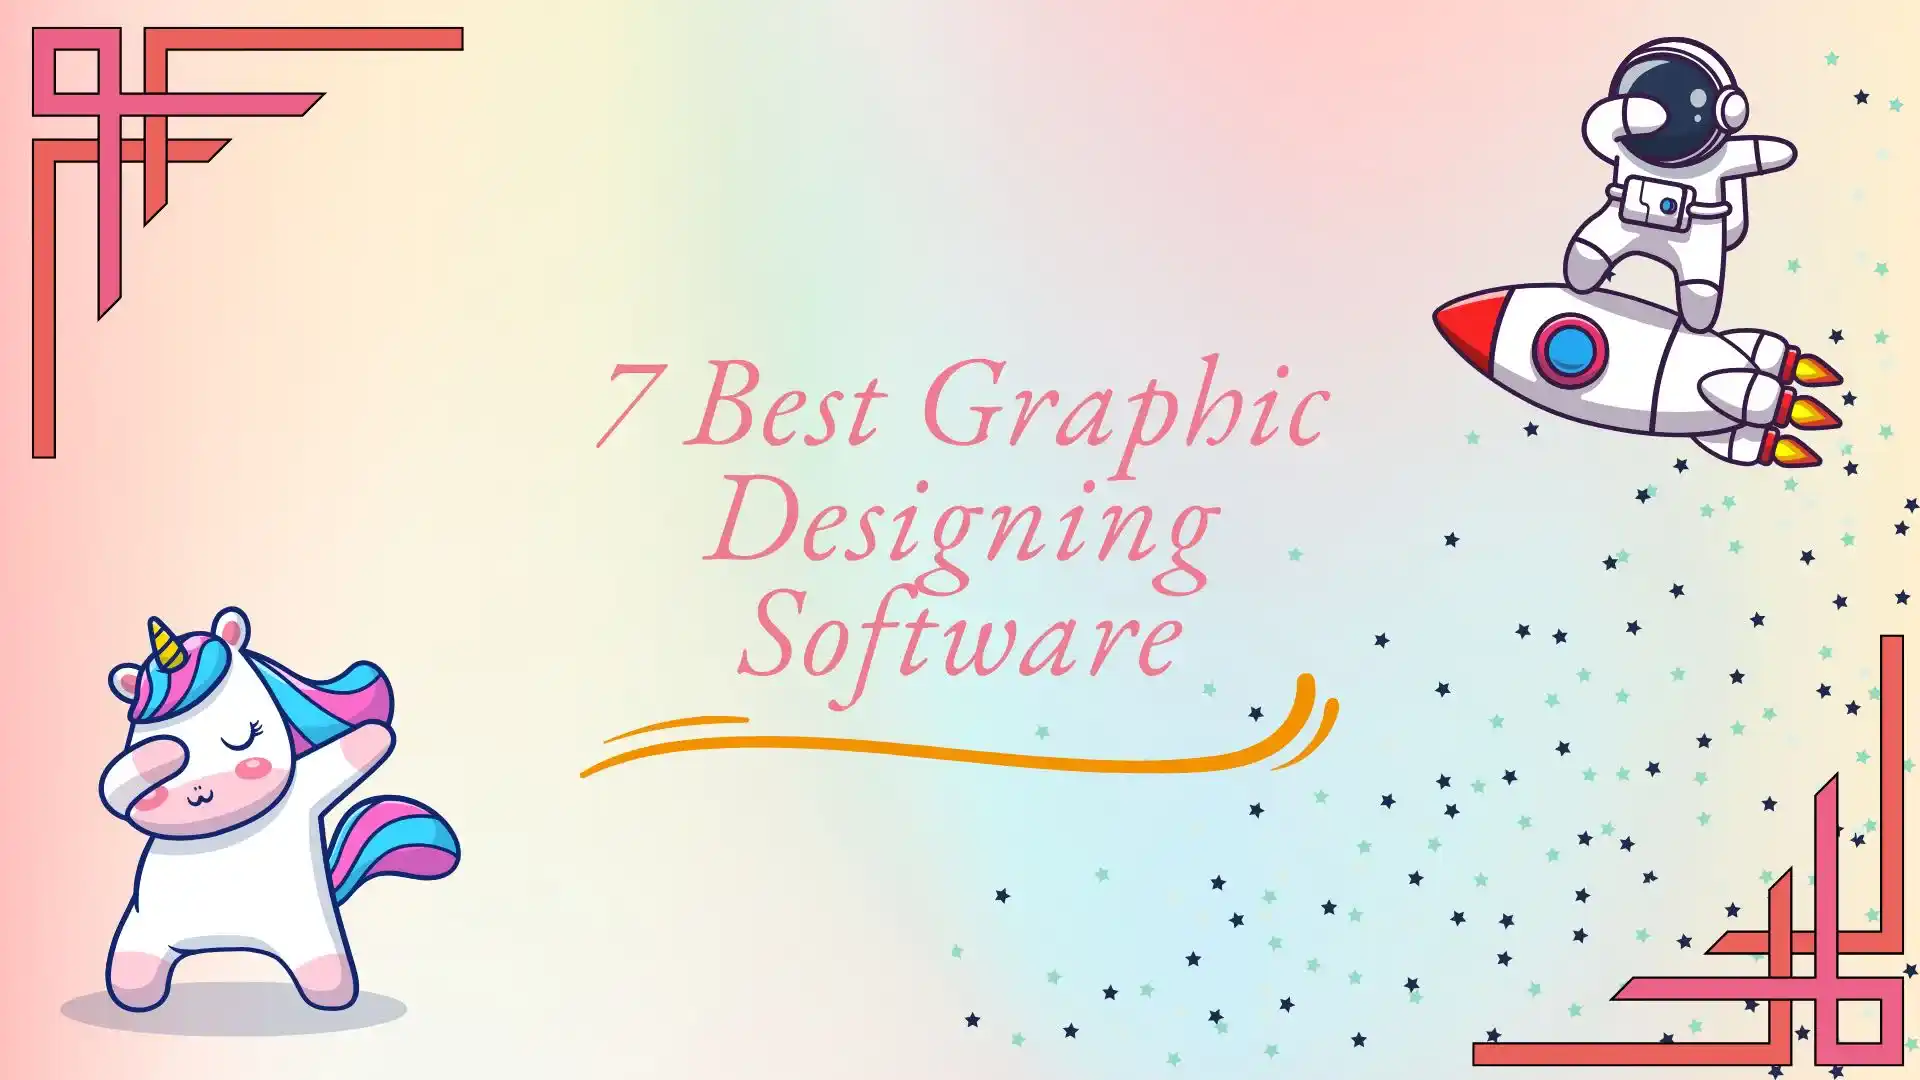 7 best graphic designing software